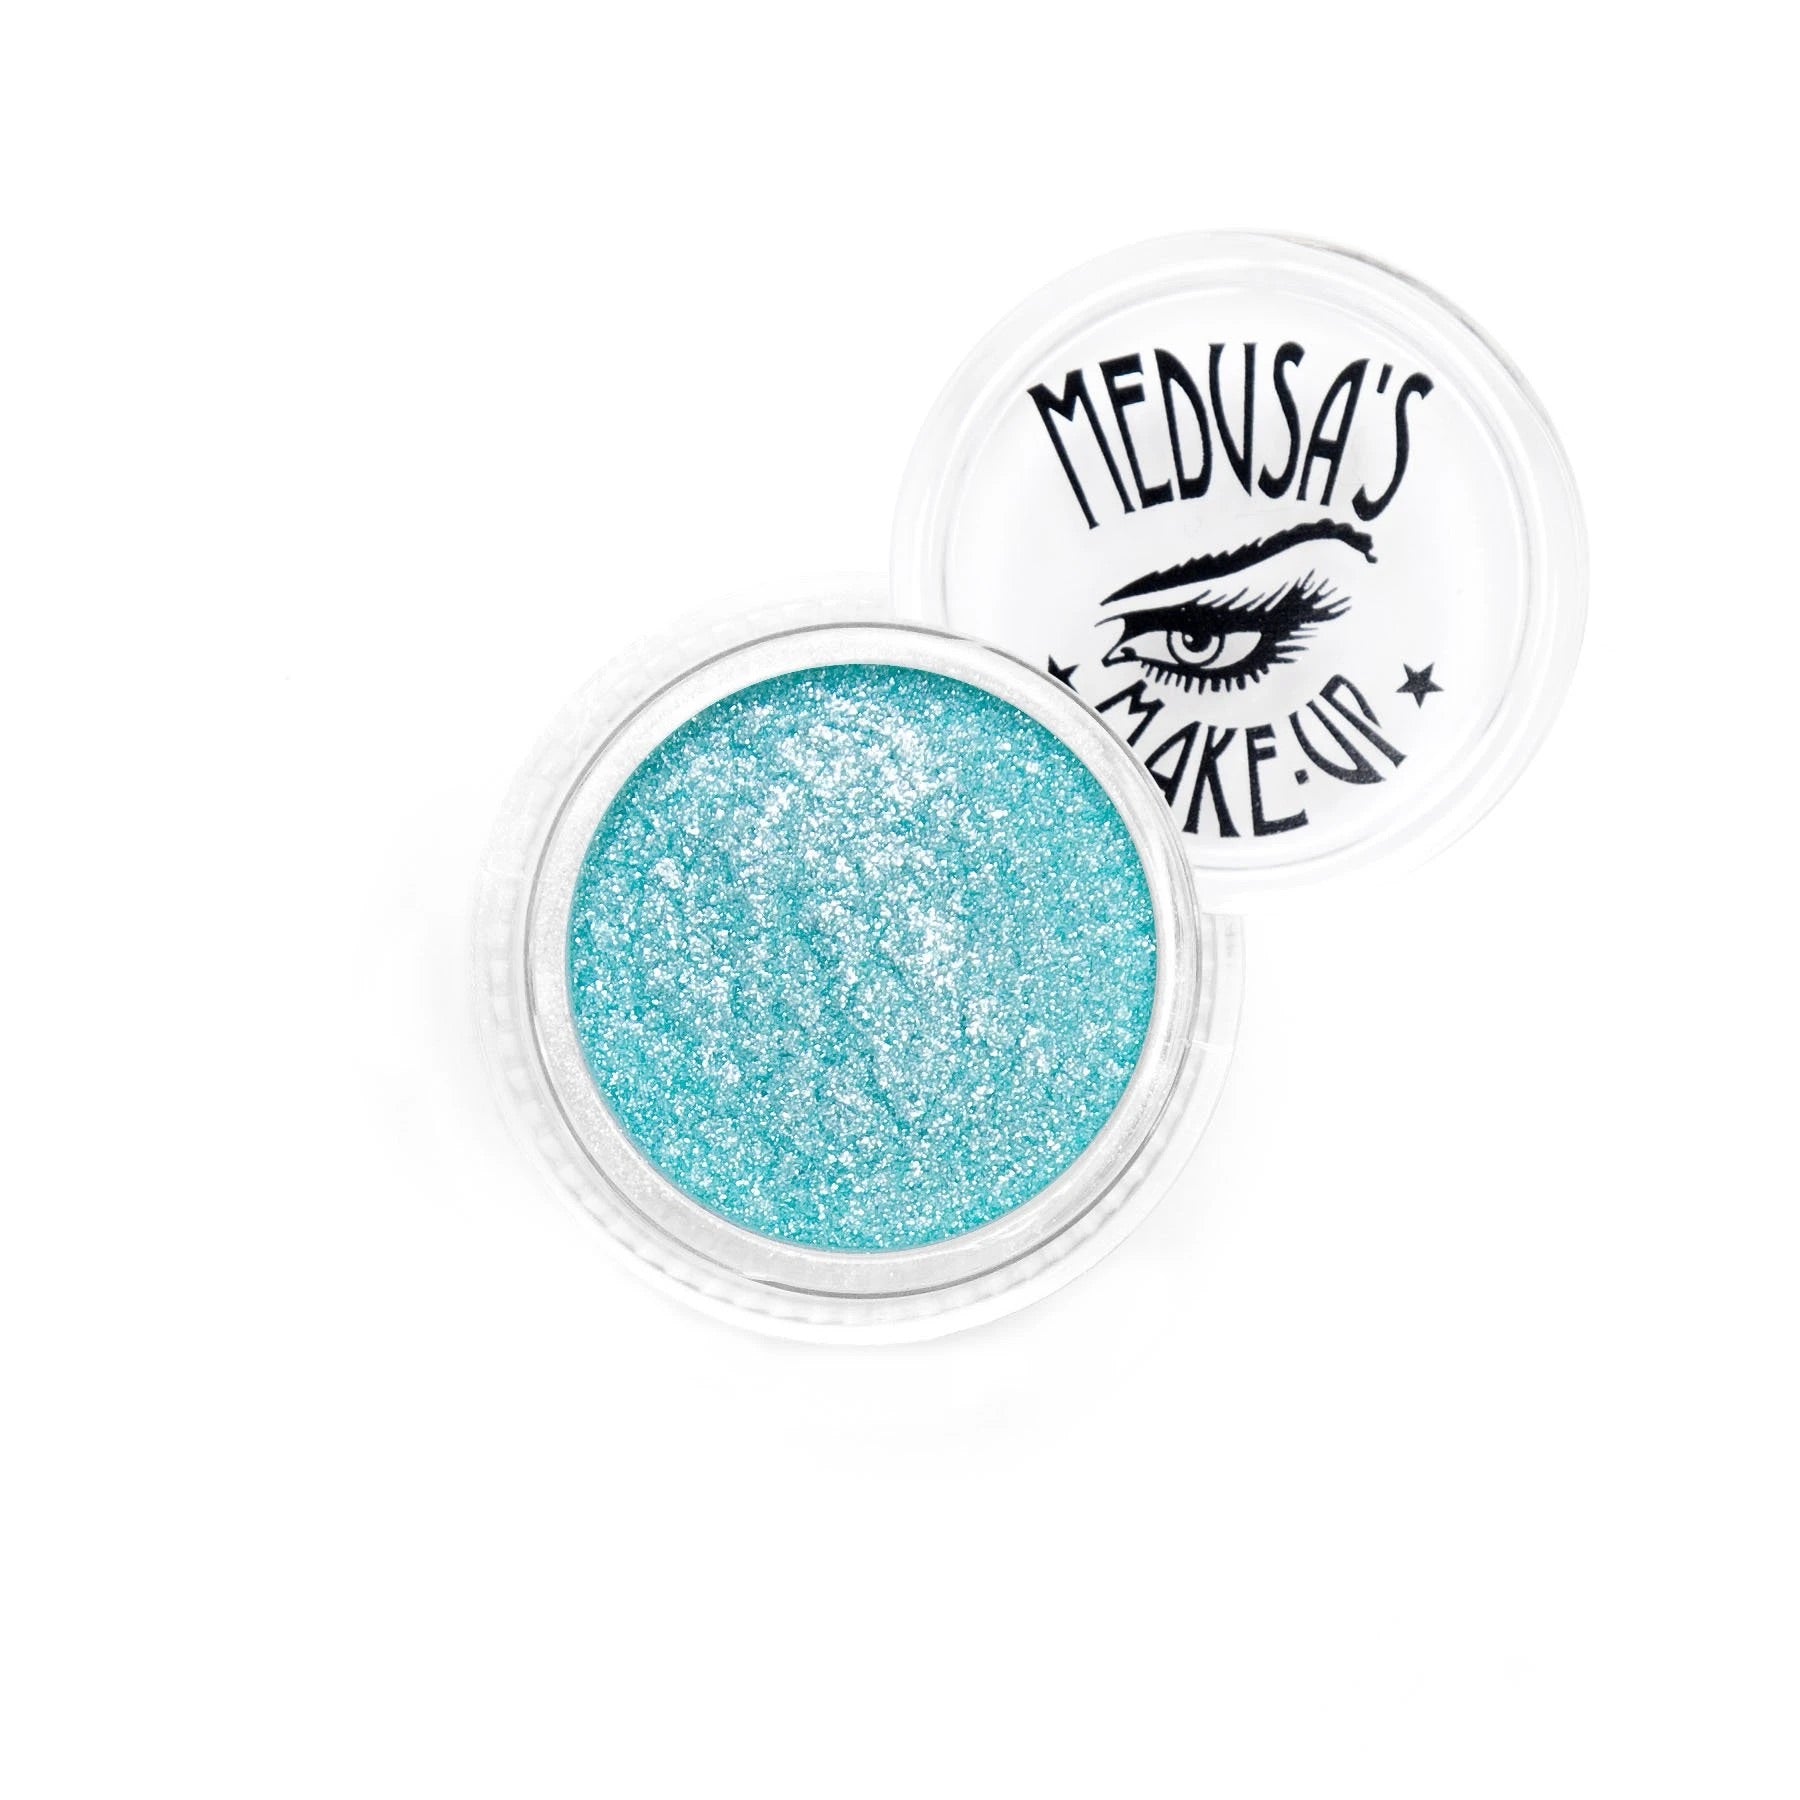 Medusa's Makeup Biodegradable Glitter